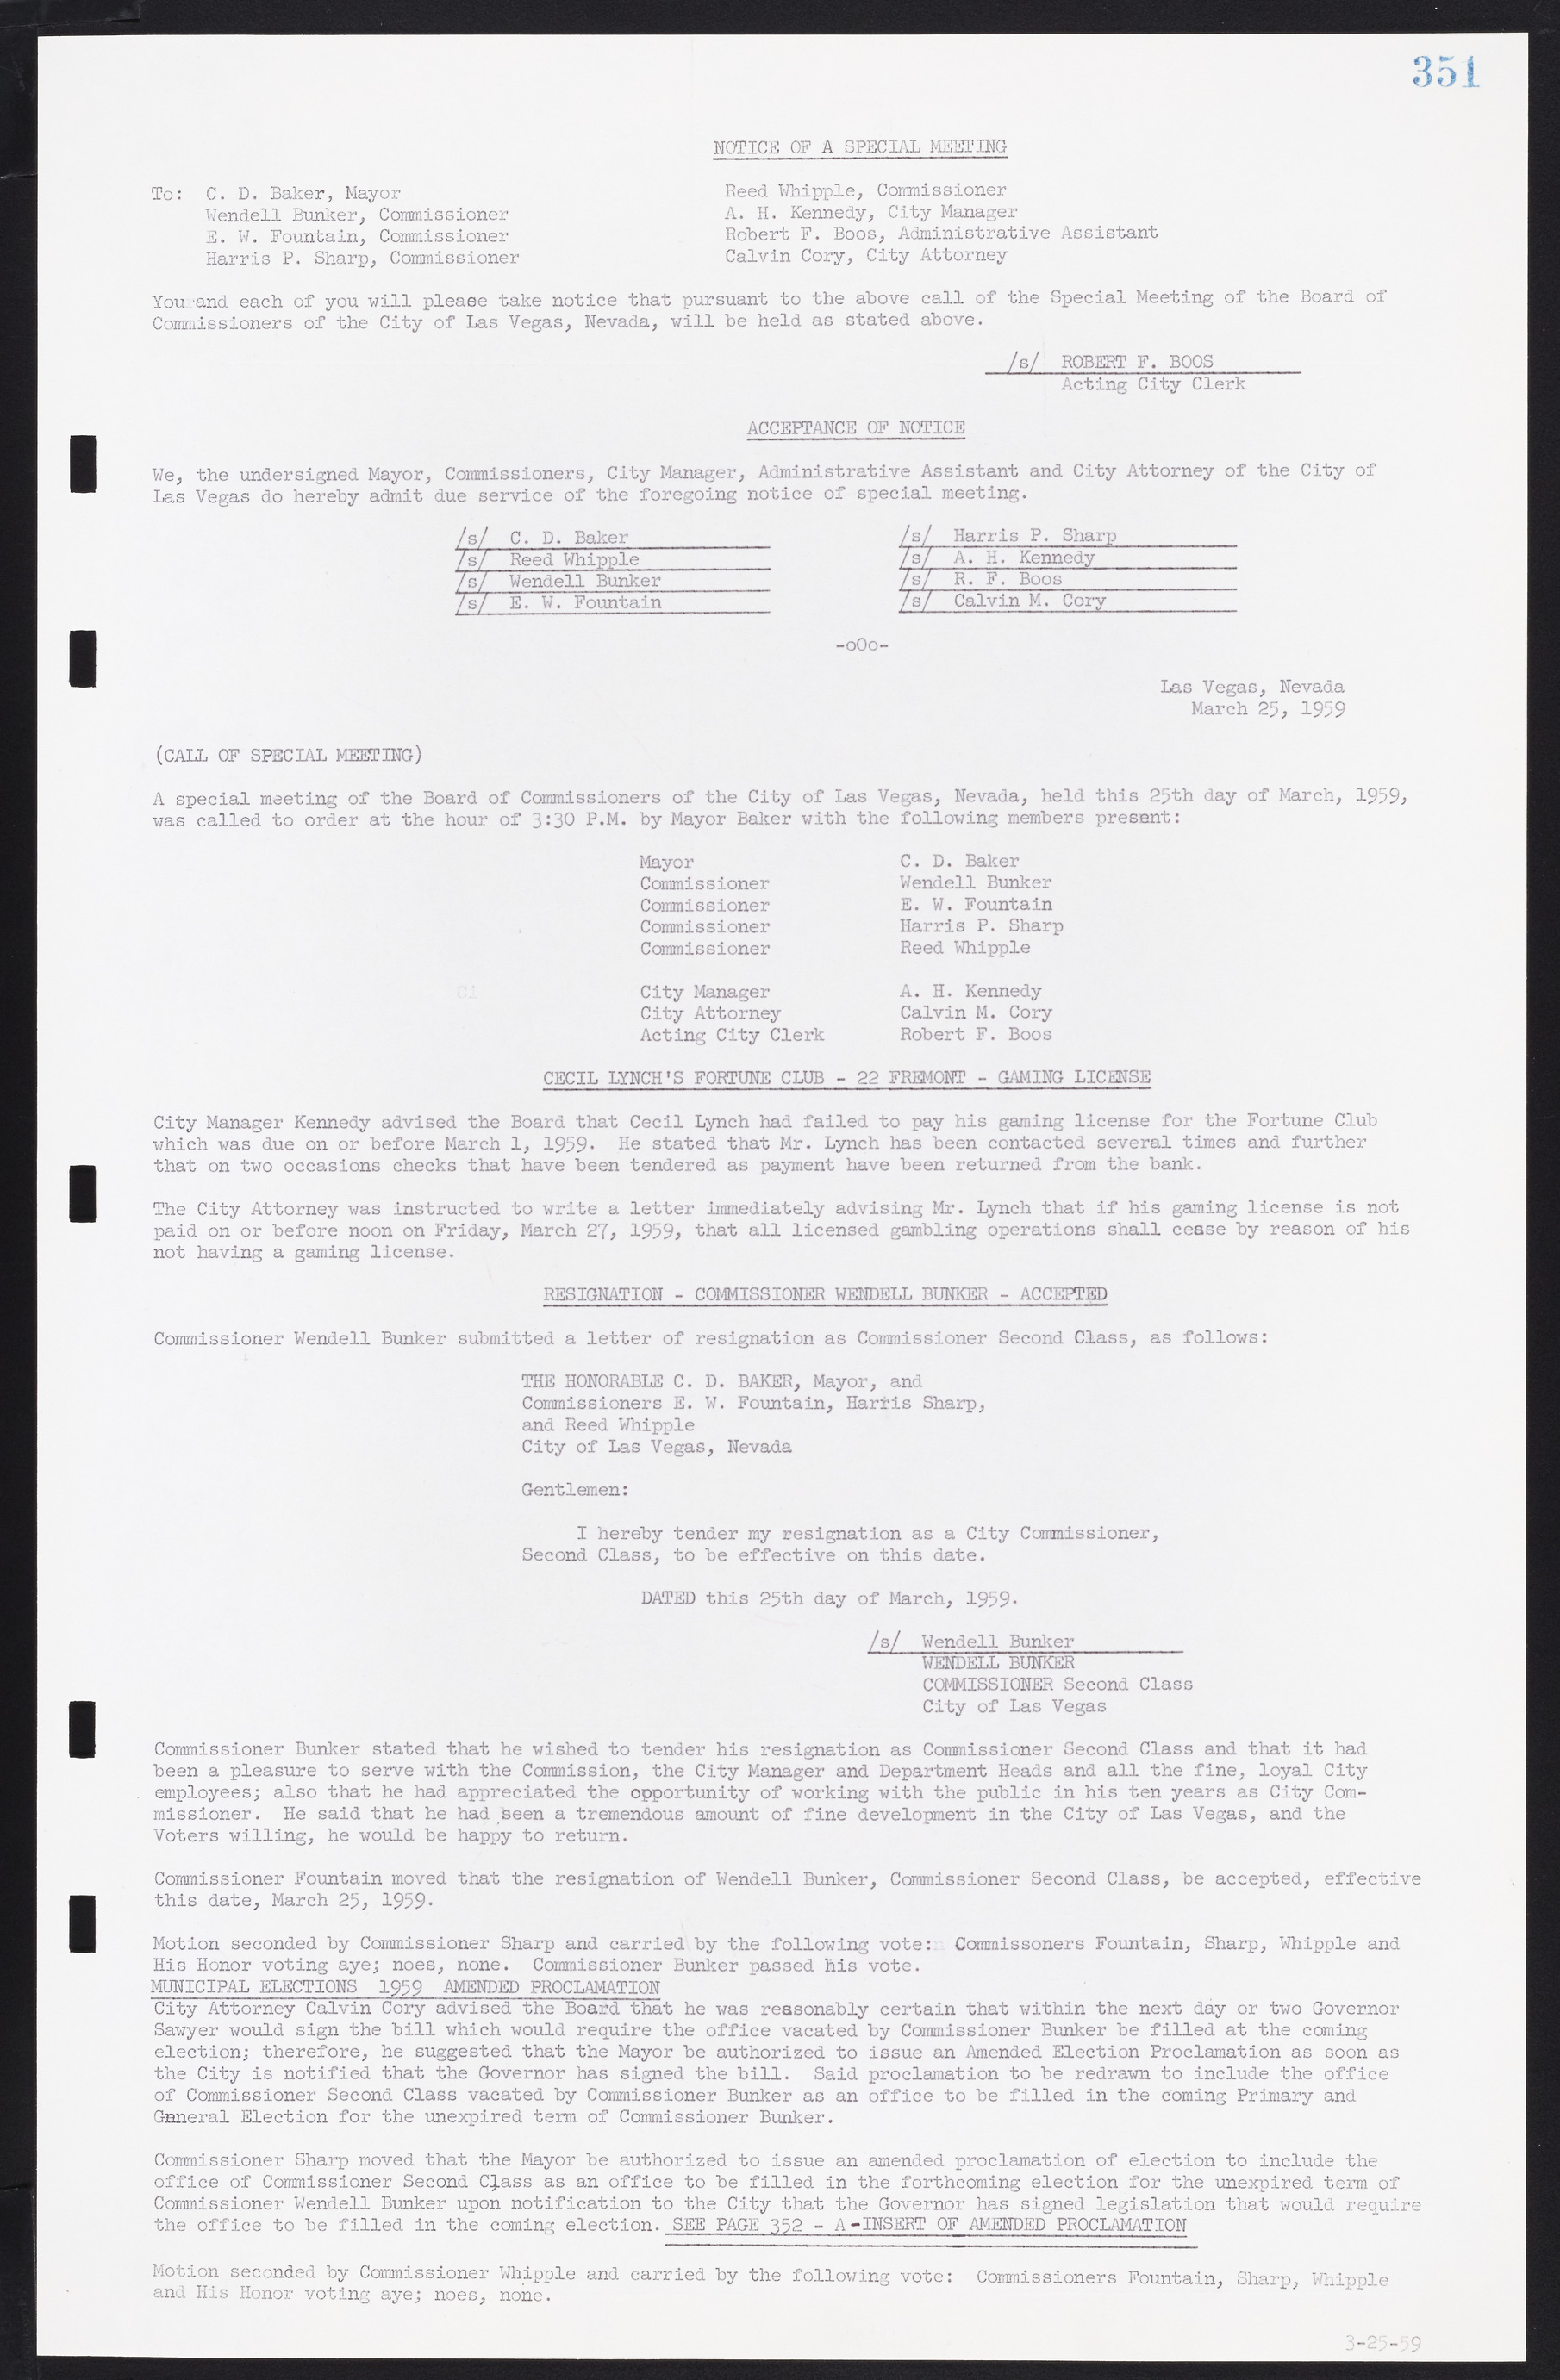 Las Vegas City Commission Minutes, November 20, 1957 to December 2, 1959, lvc000011-359